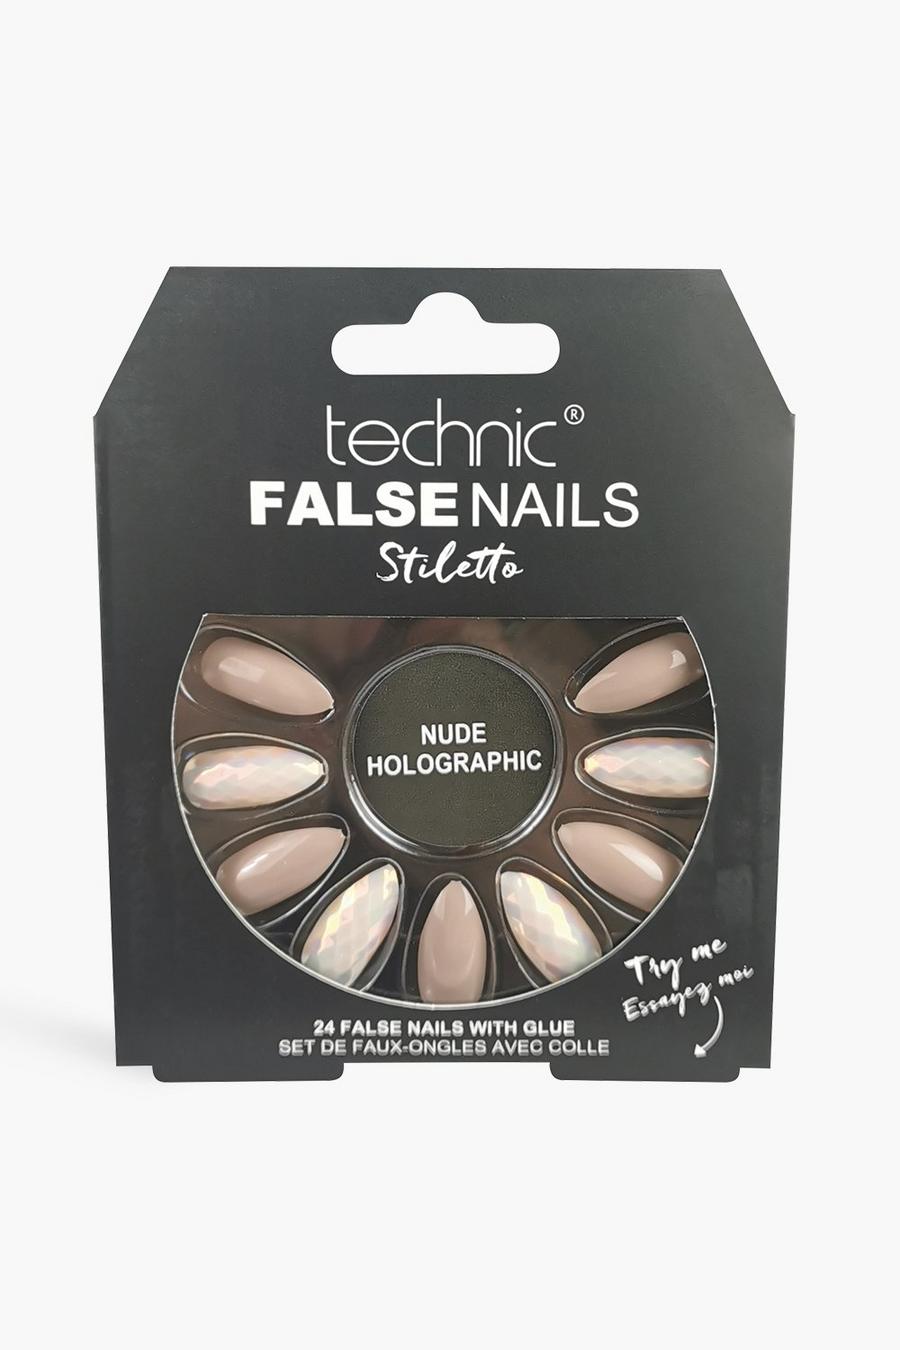 Technic False Nails - Stiletto Nude Holographic image number 1